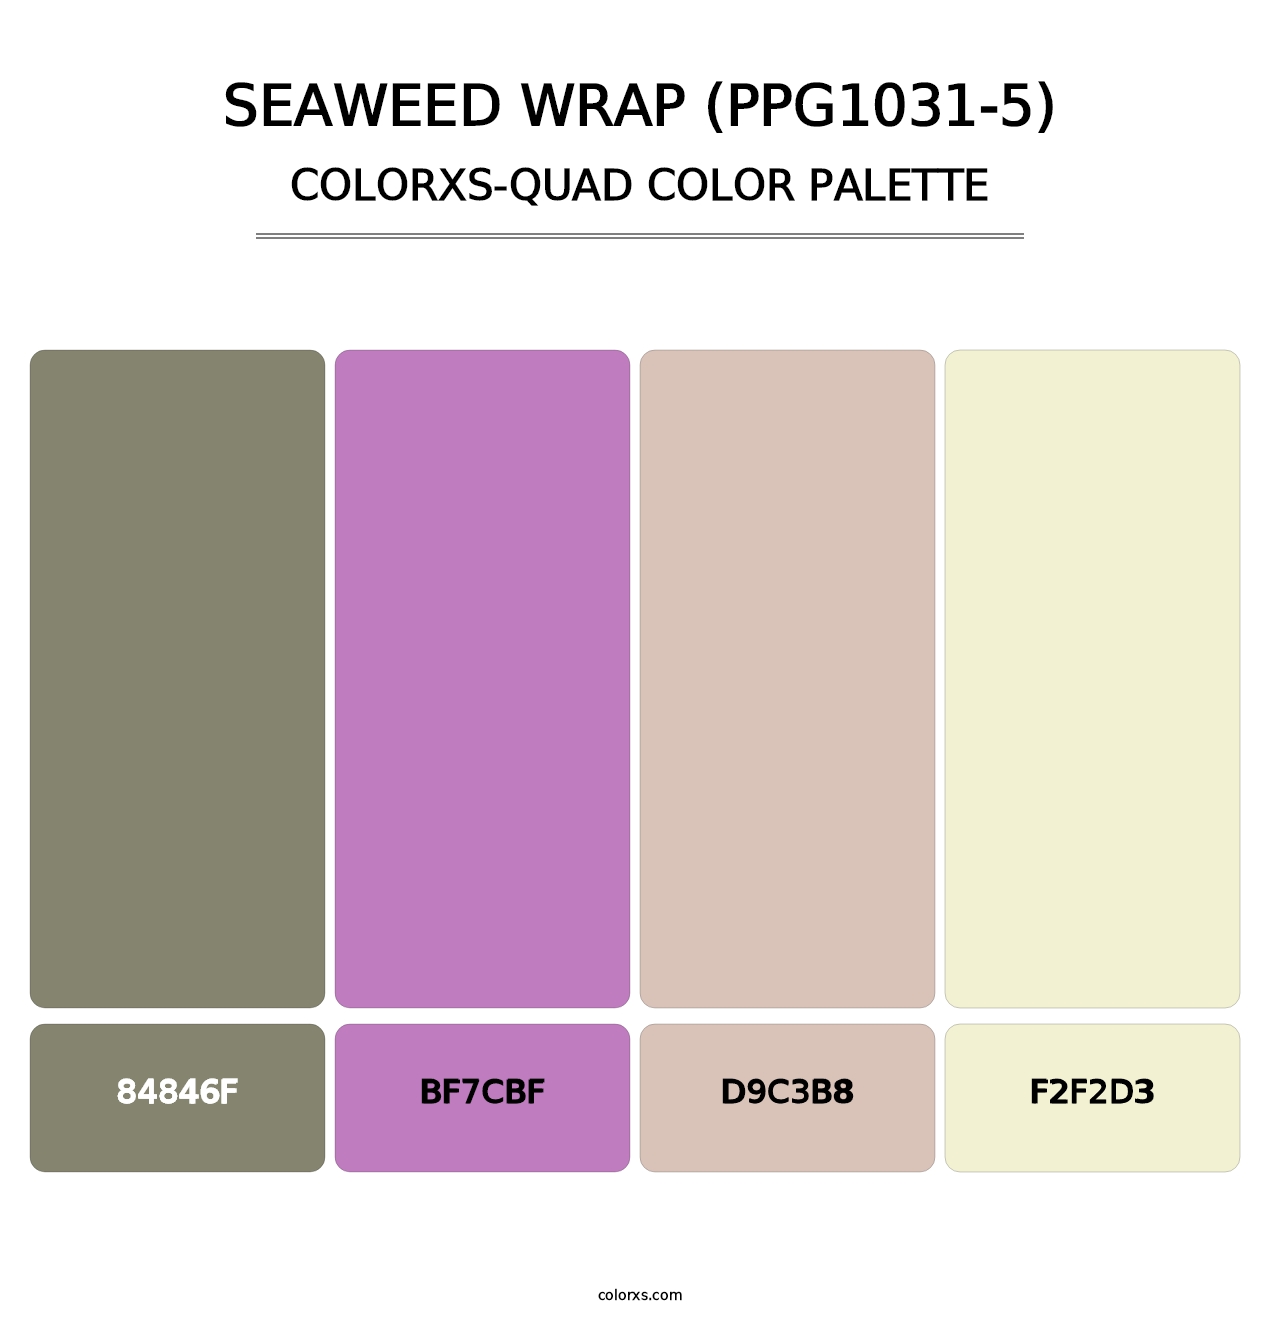 Seaweed Wrap (PPG1031-5) - Colorxs Quad Palette